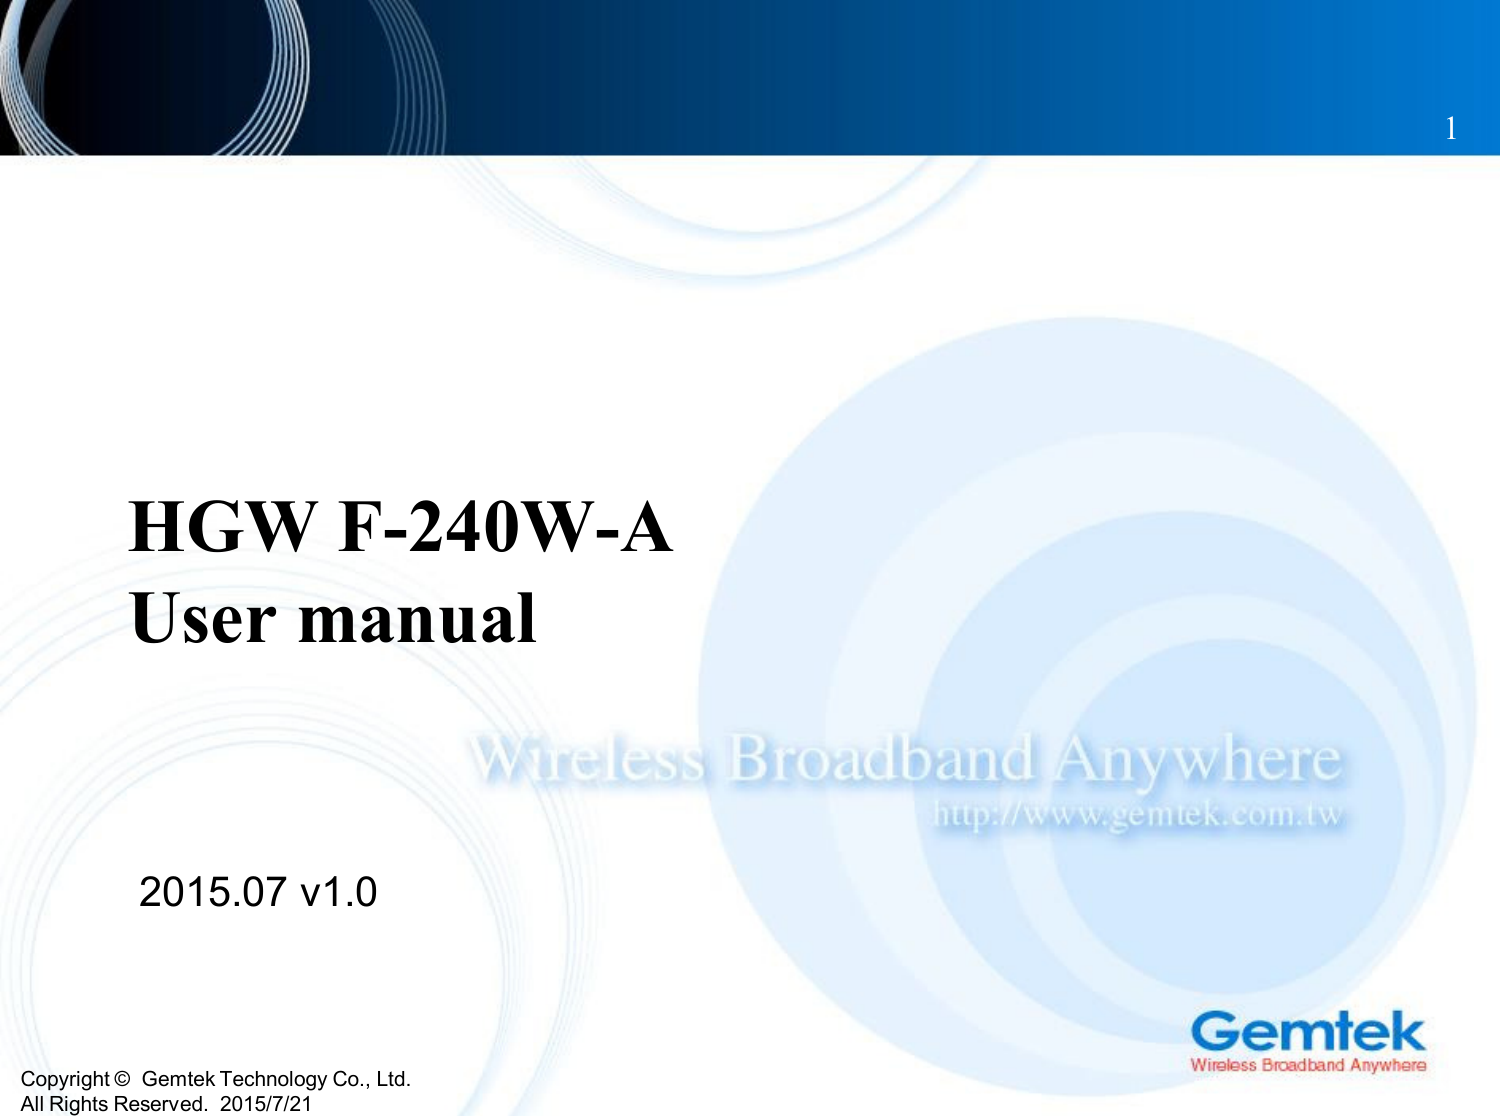 Copyright ©  Gemtek Technology Co., Ltd.All Rights Reserved.  2015/7/21HGW F-240W-A User manual2015.07 v1.01